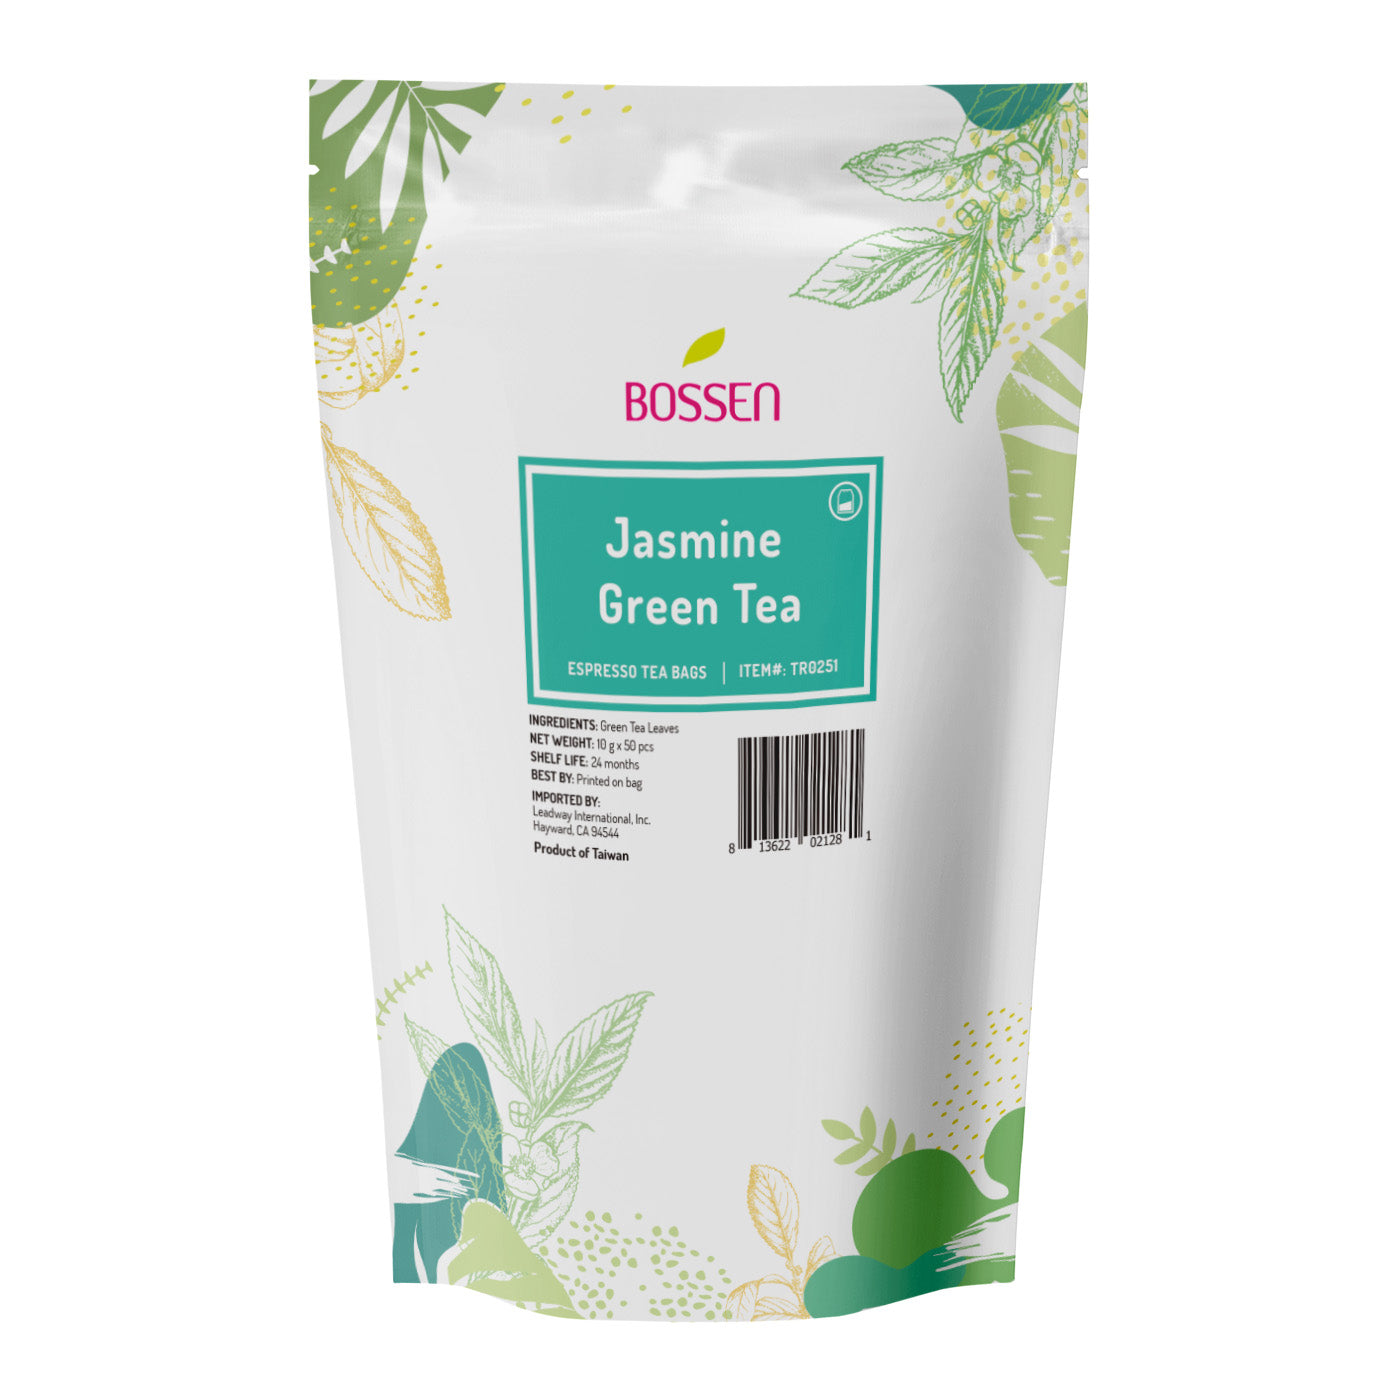 Jasmine Green Tea Bags for Bubble Tea drinks, Tea beverages, Cafes –